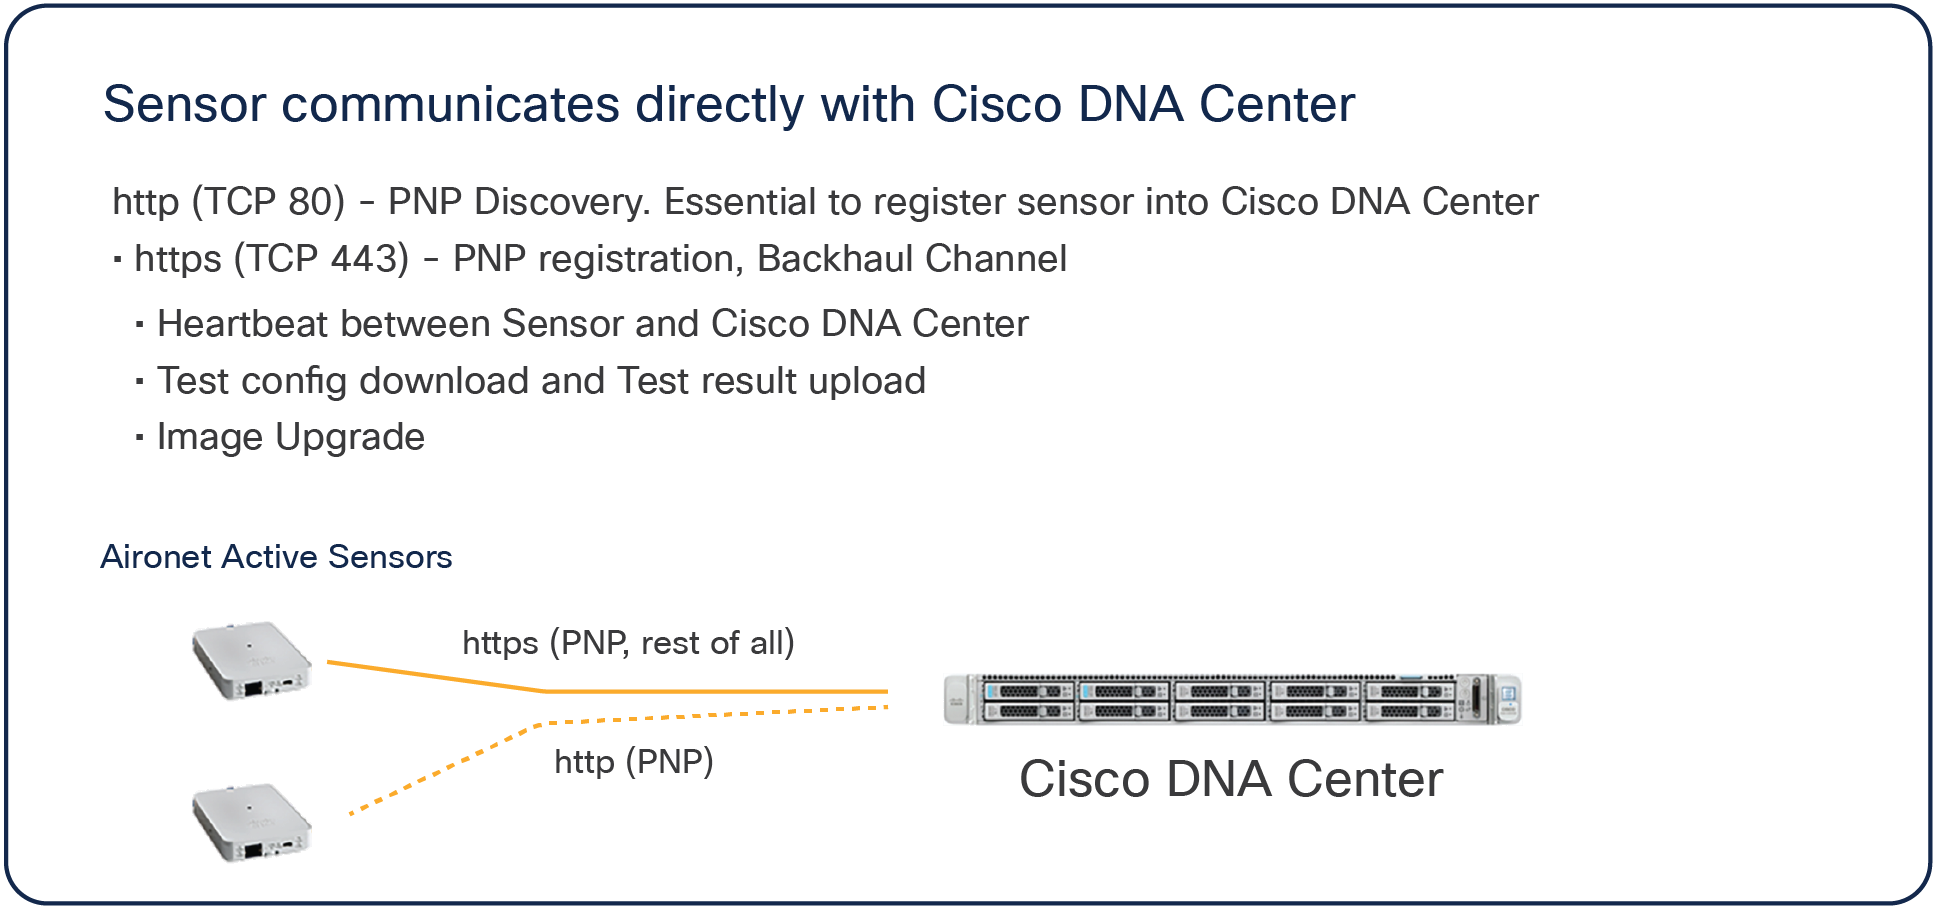 Network port between sensor and Cisco DNA Center